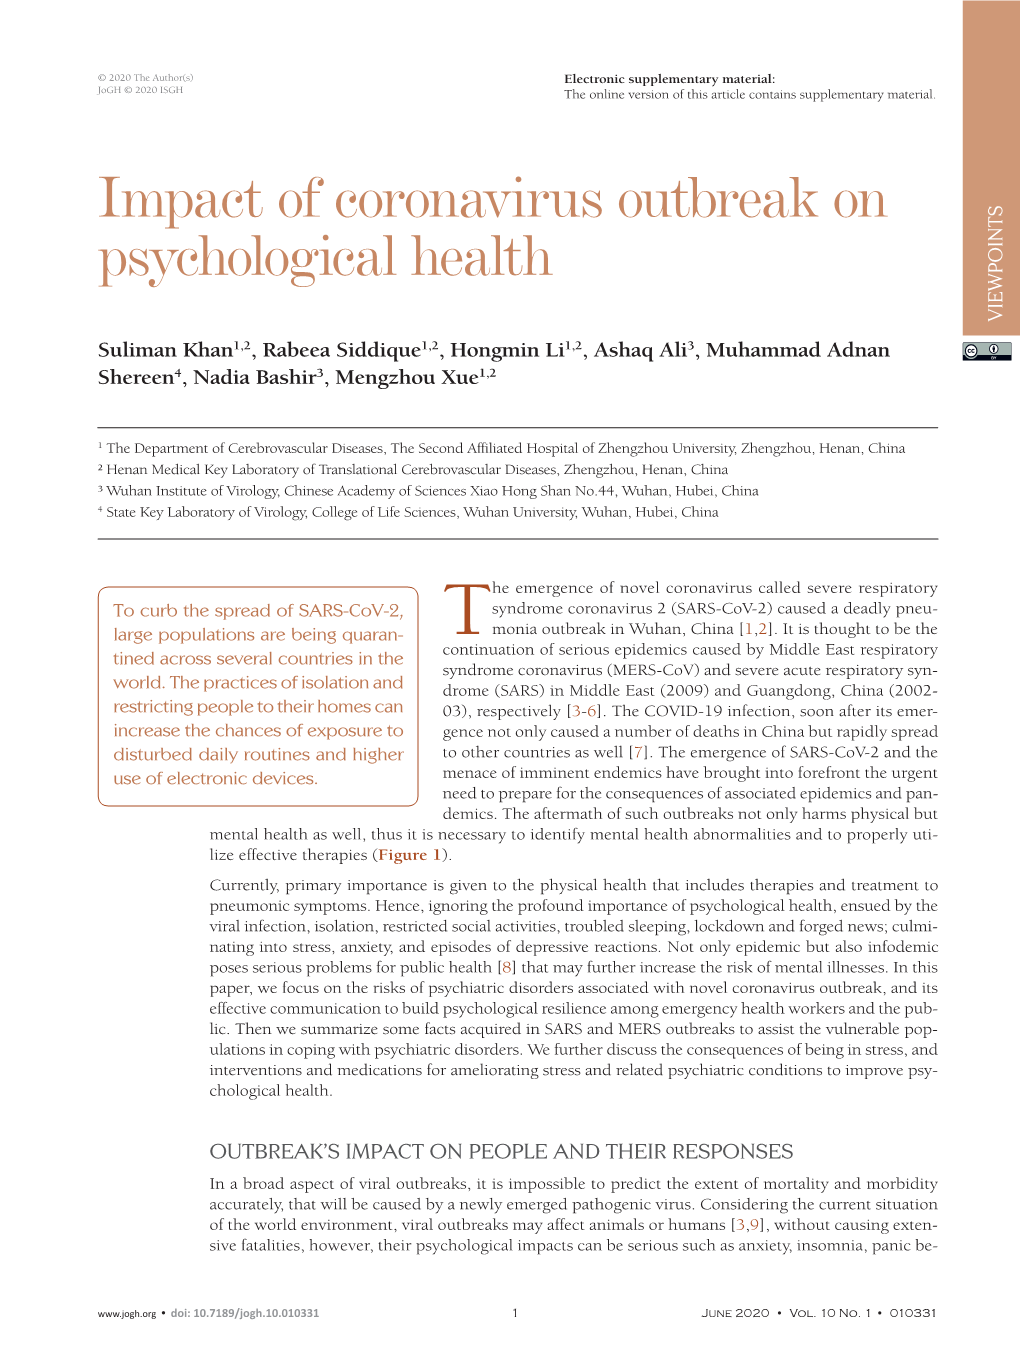 Impact of Coronavirus Outbreak on Psychological Health